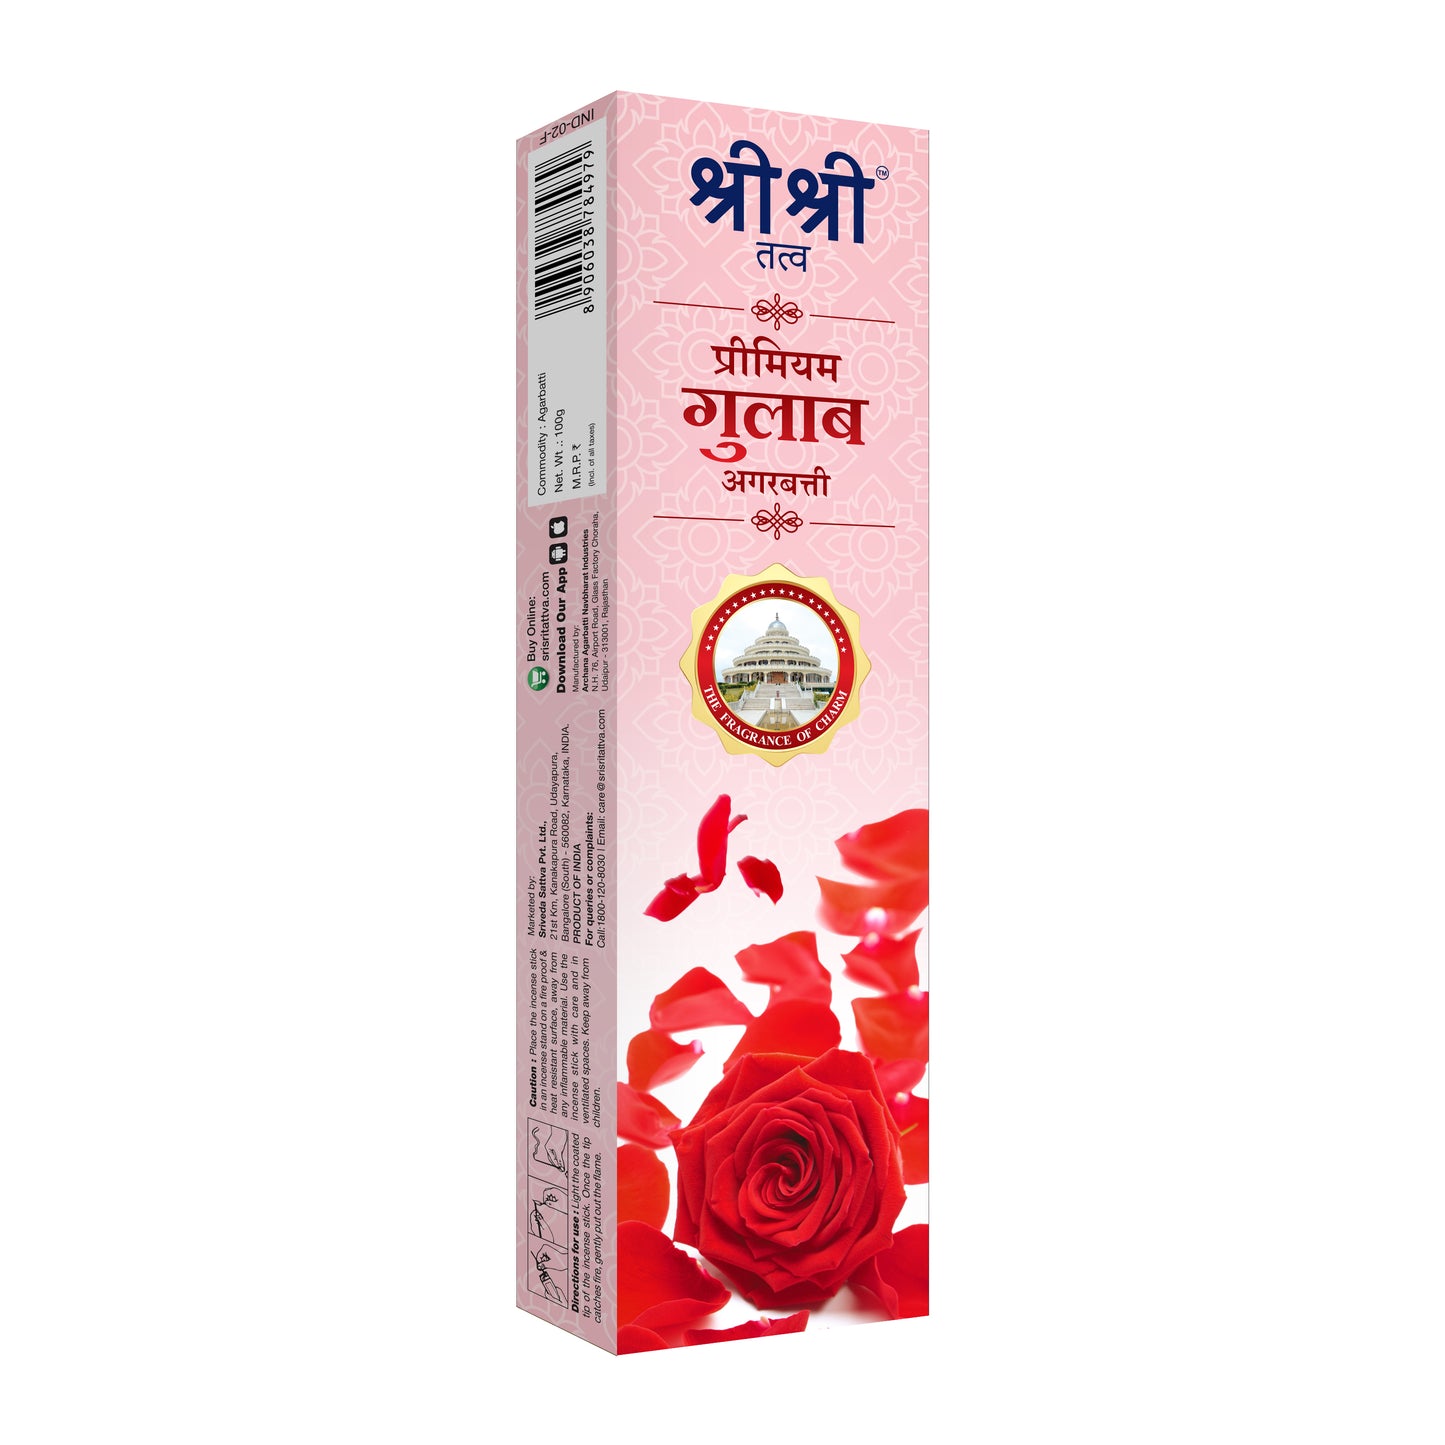 Premium Rose Incense Sticks For Pooja | 55 Agarbatti Sticks | Fragrances – Natural Rose | 100 g